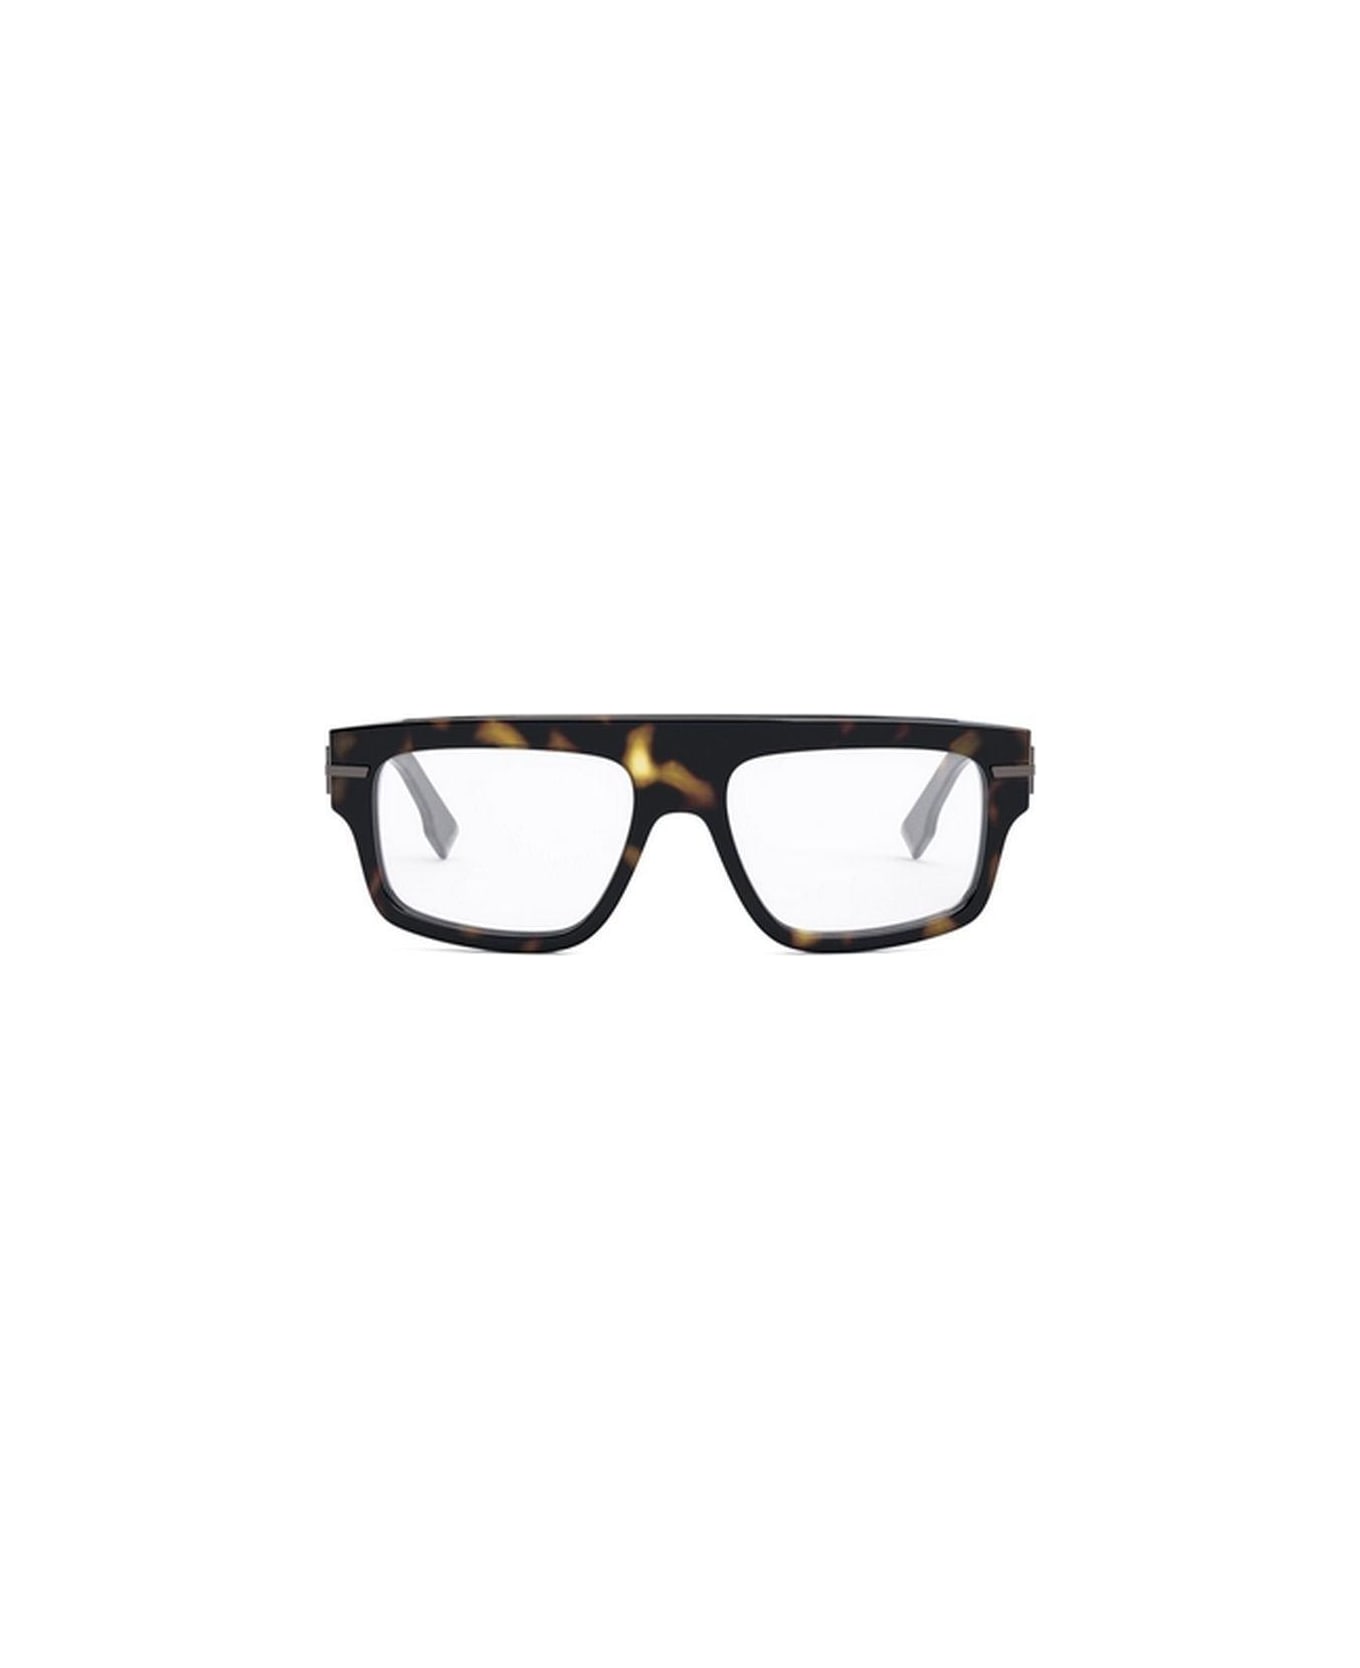 Fendi Eyewear Rectangular-frame Glasses - 052 アイウェア